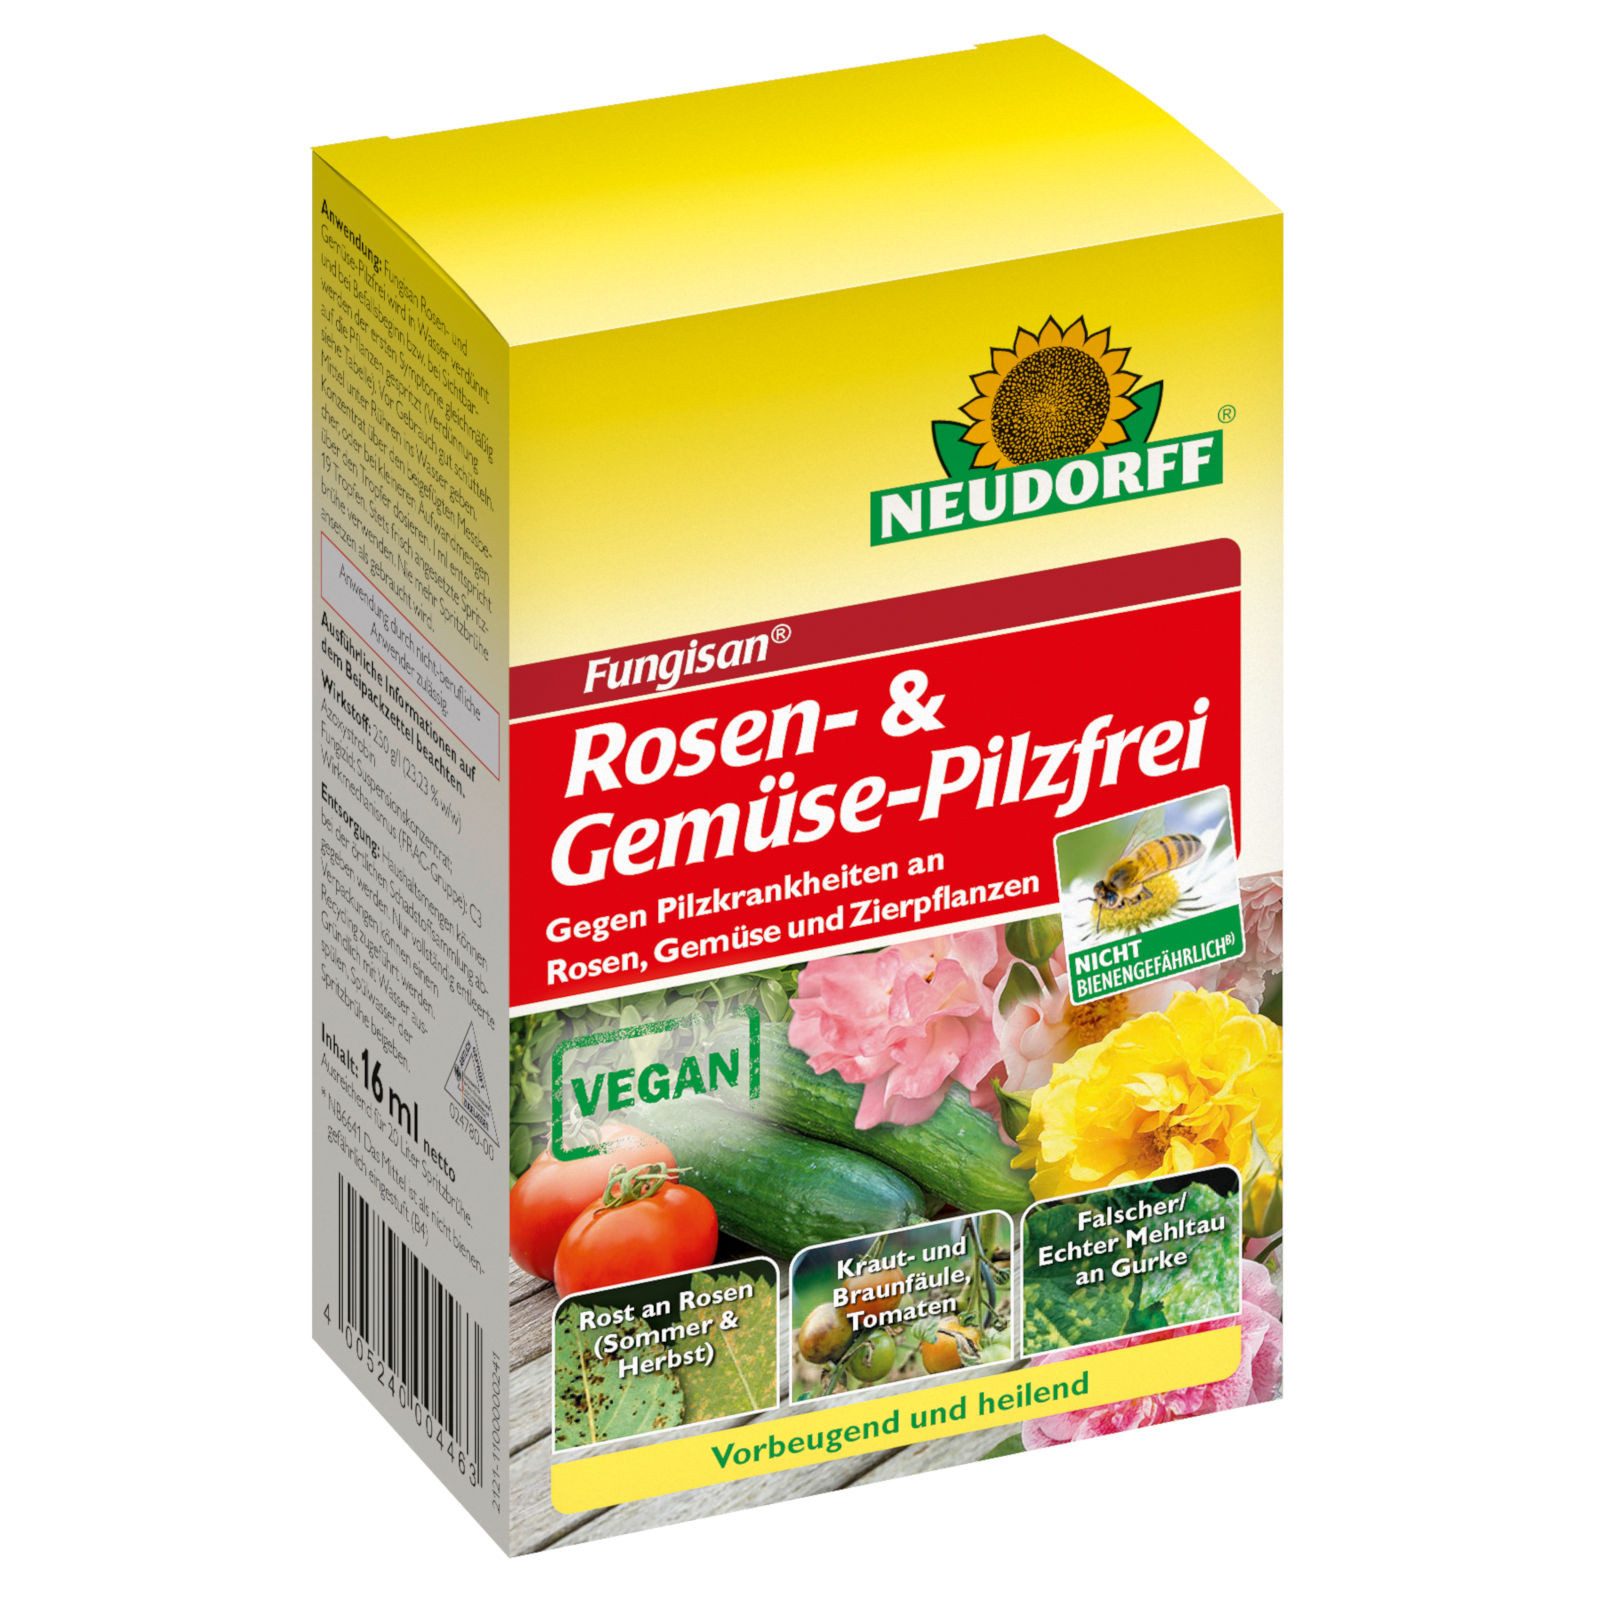 Neudorff Pflanzen-Pilzfrei Fungisan Rosen- und Gemüse-Pilzfrei 16 ml